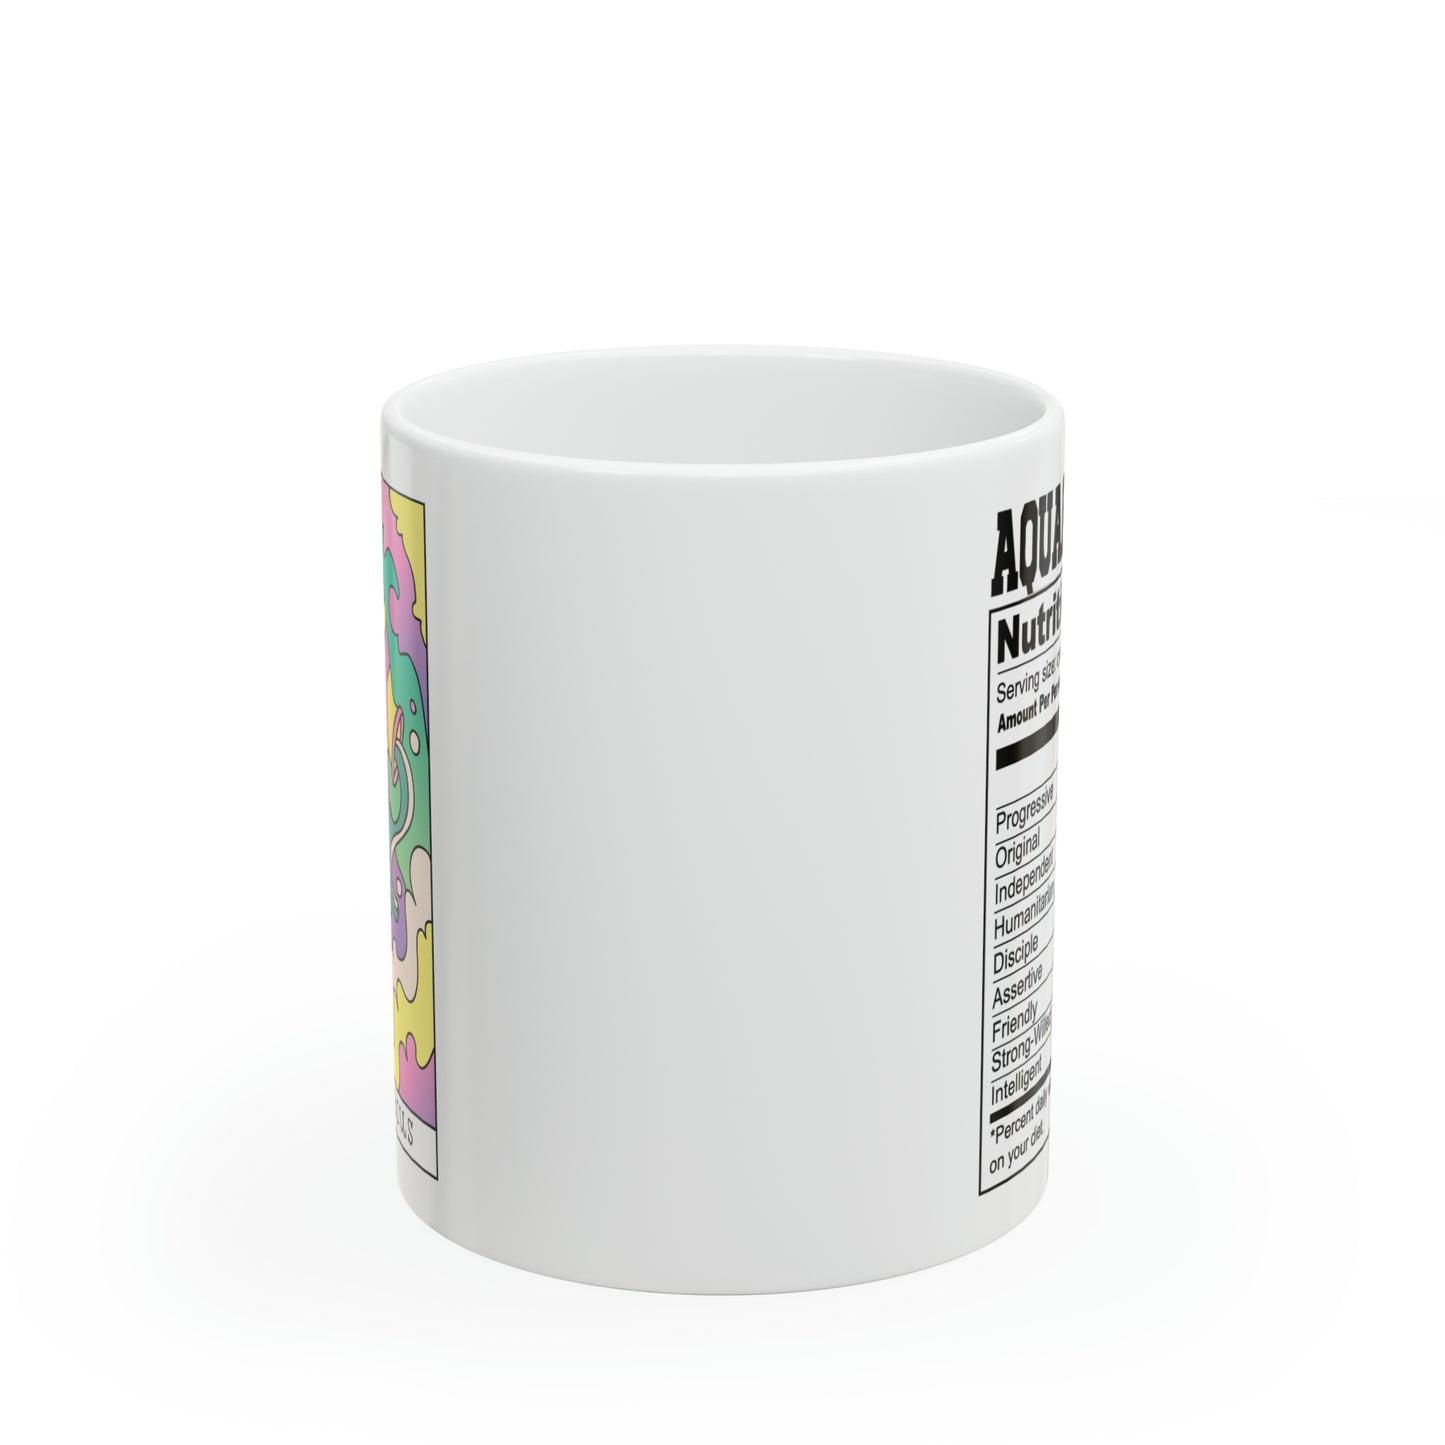 Aquarius Tarot Card Coffee Mug - Double Sided 11oz White Ceramic by TheGlassyLass.com